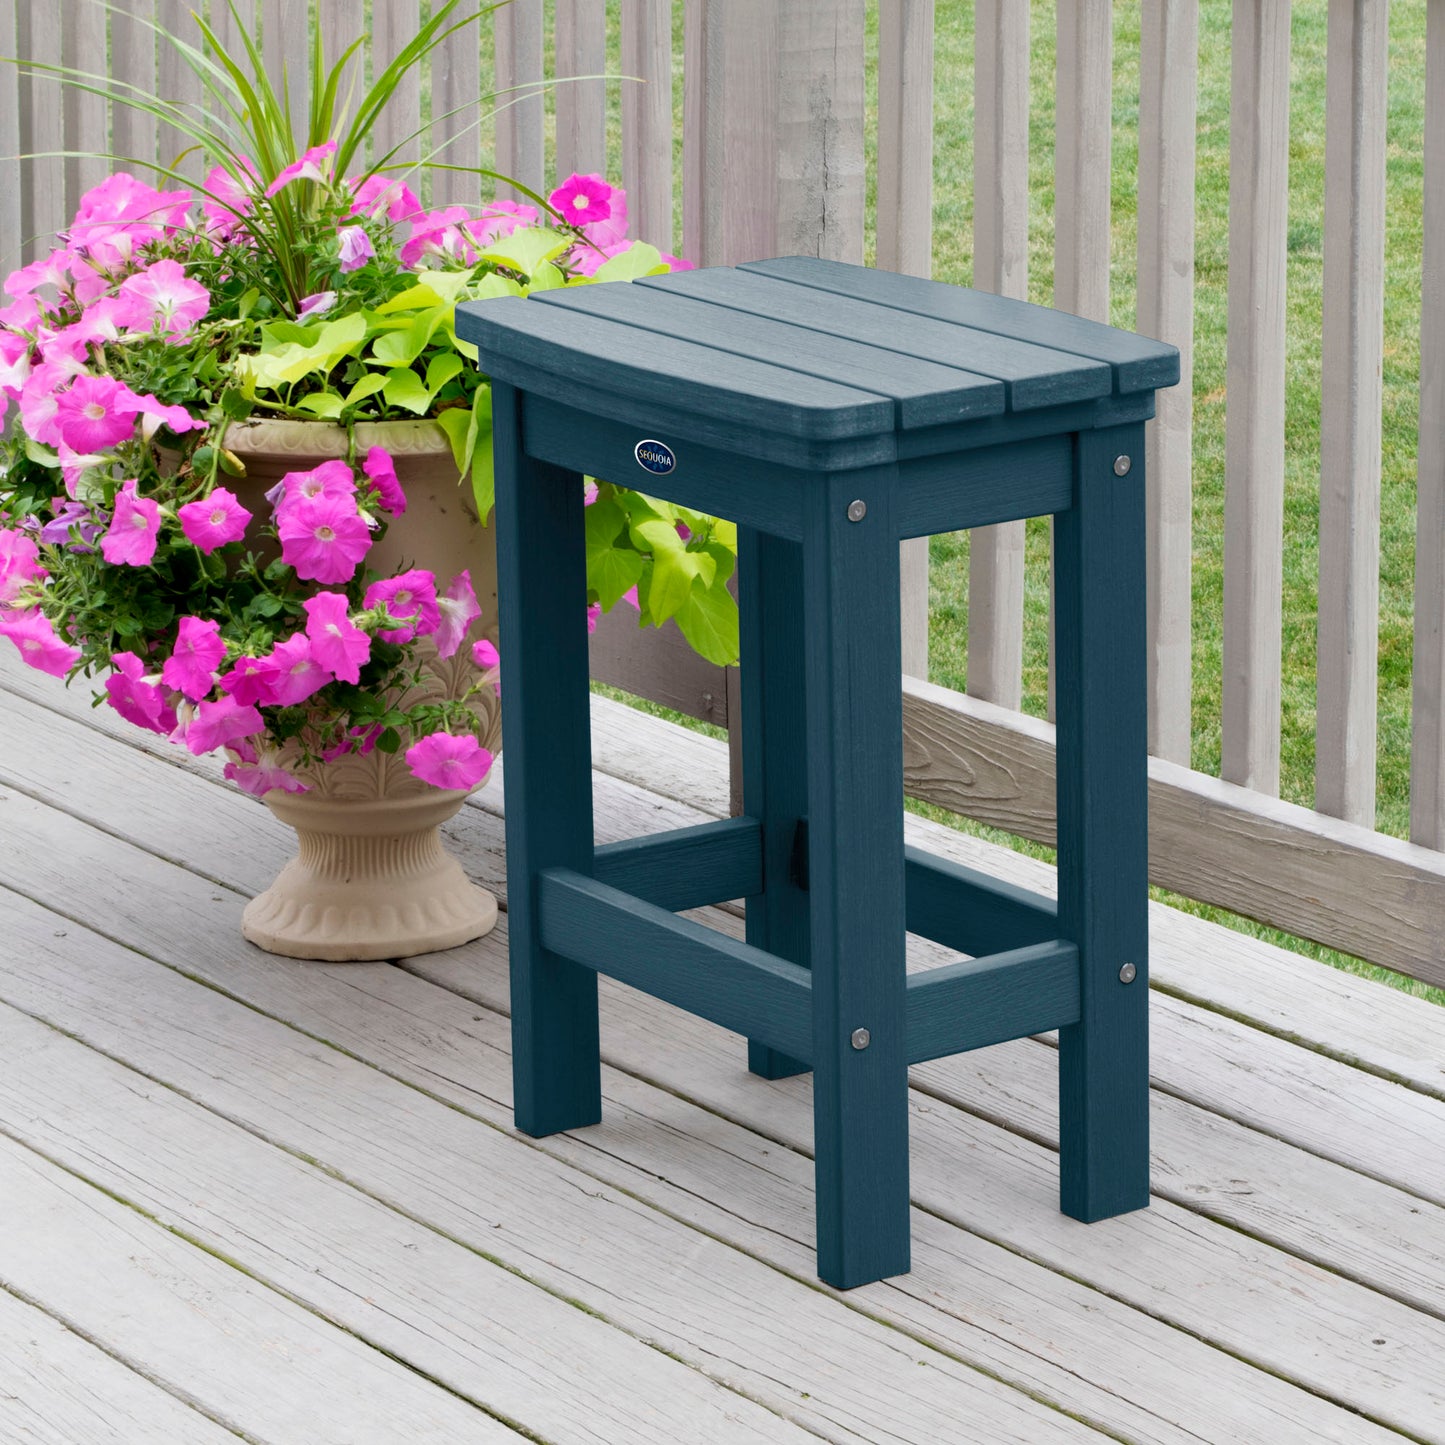 Light blue Blue Ridge counter height stool on tan wooden deck next to flowers